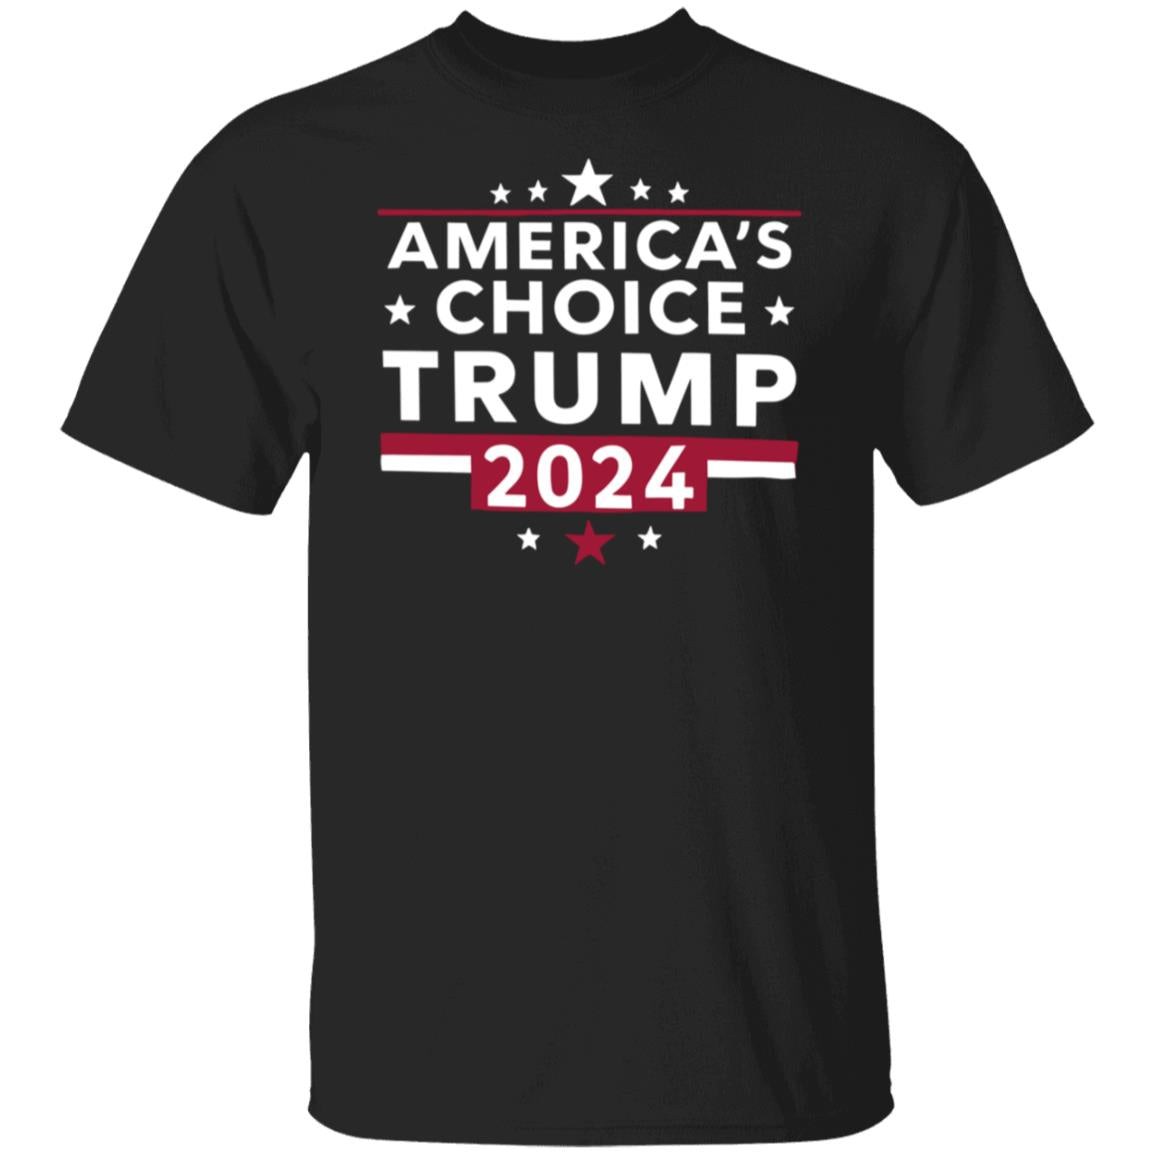 America's Choice Trump 2024 T-Shirt